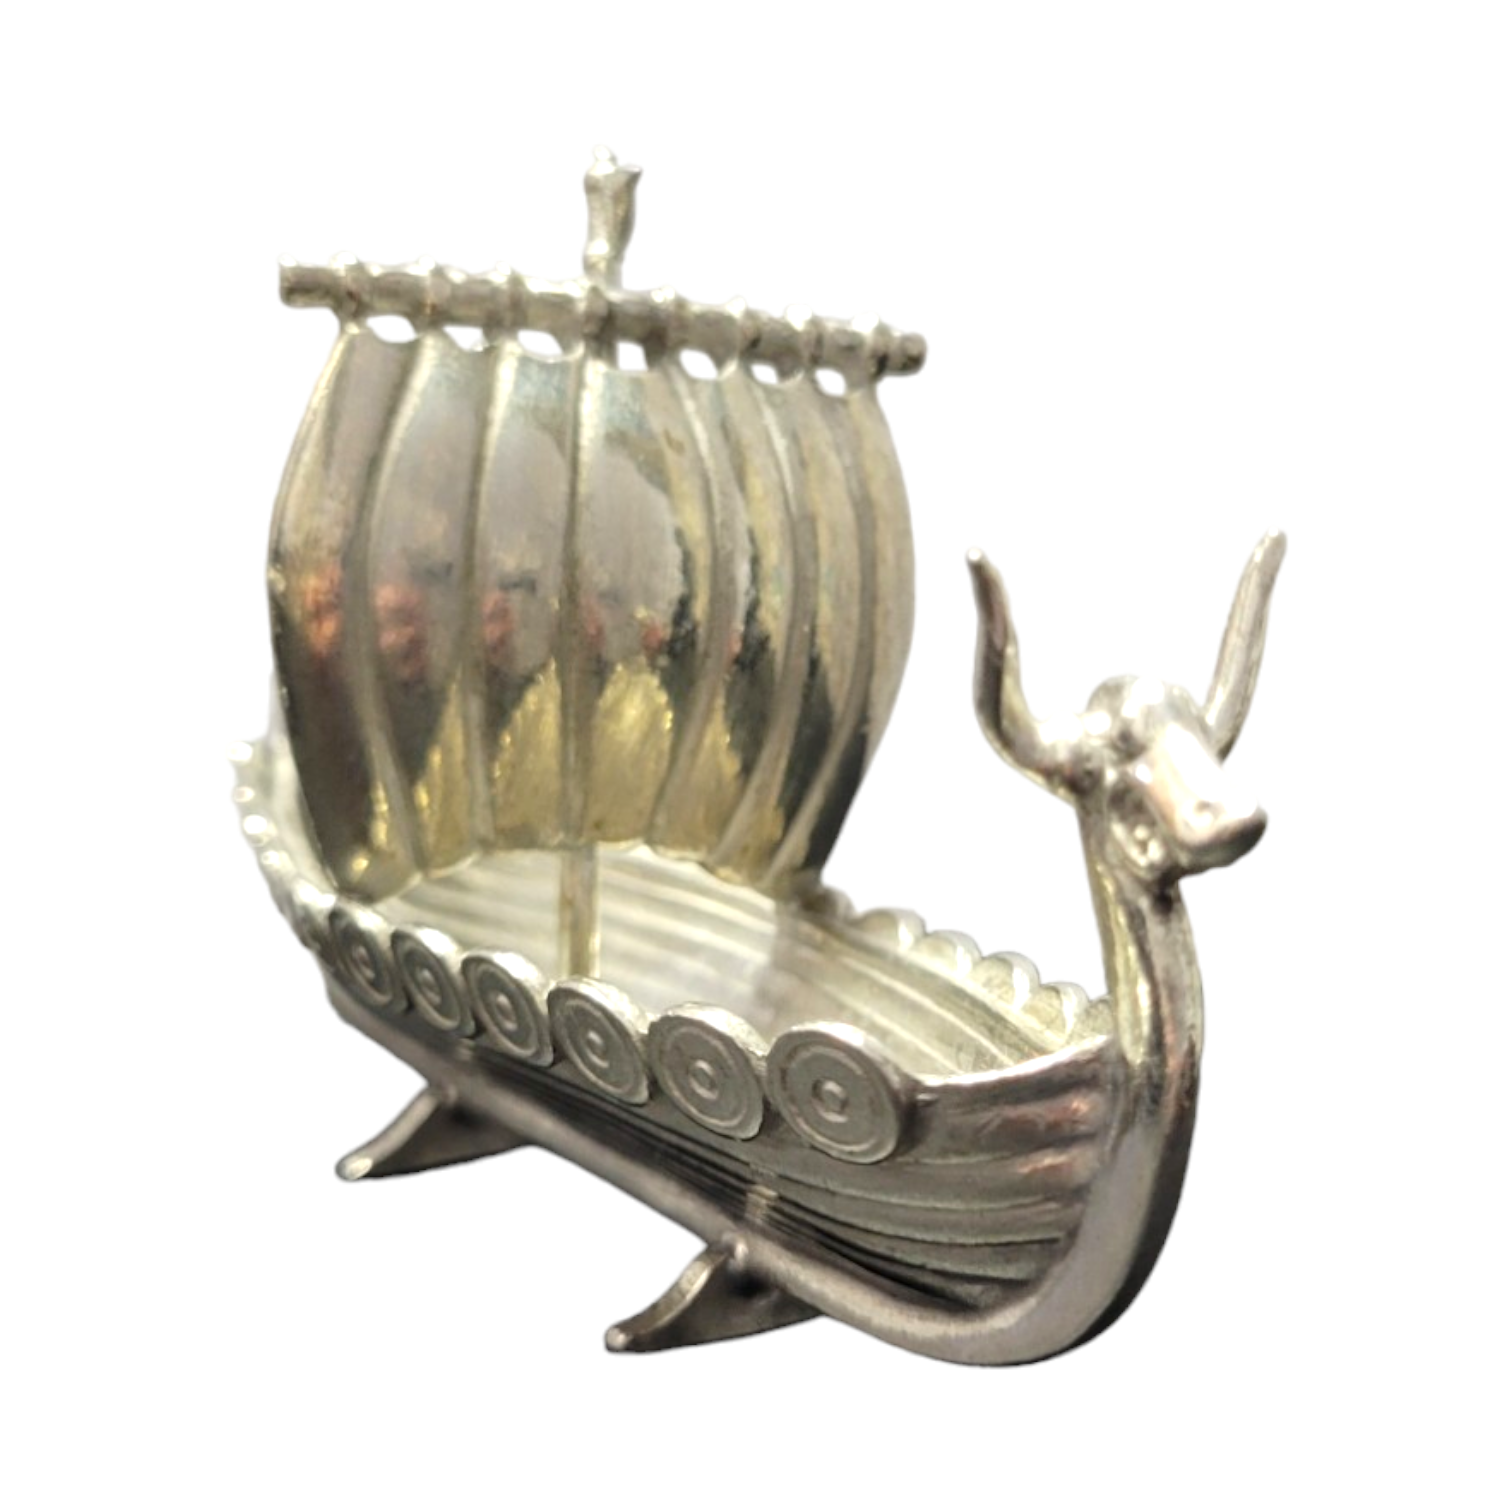 Figurine: Metal Viking Ship 4" x 2"